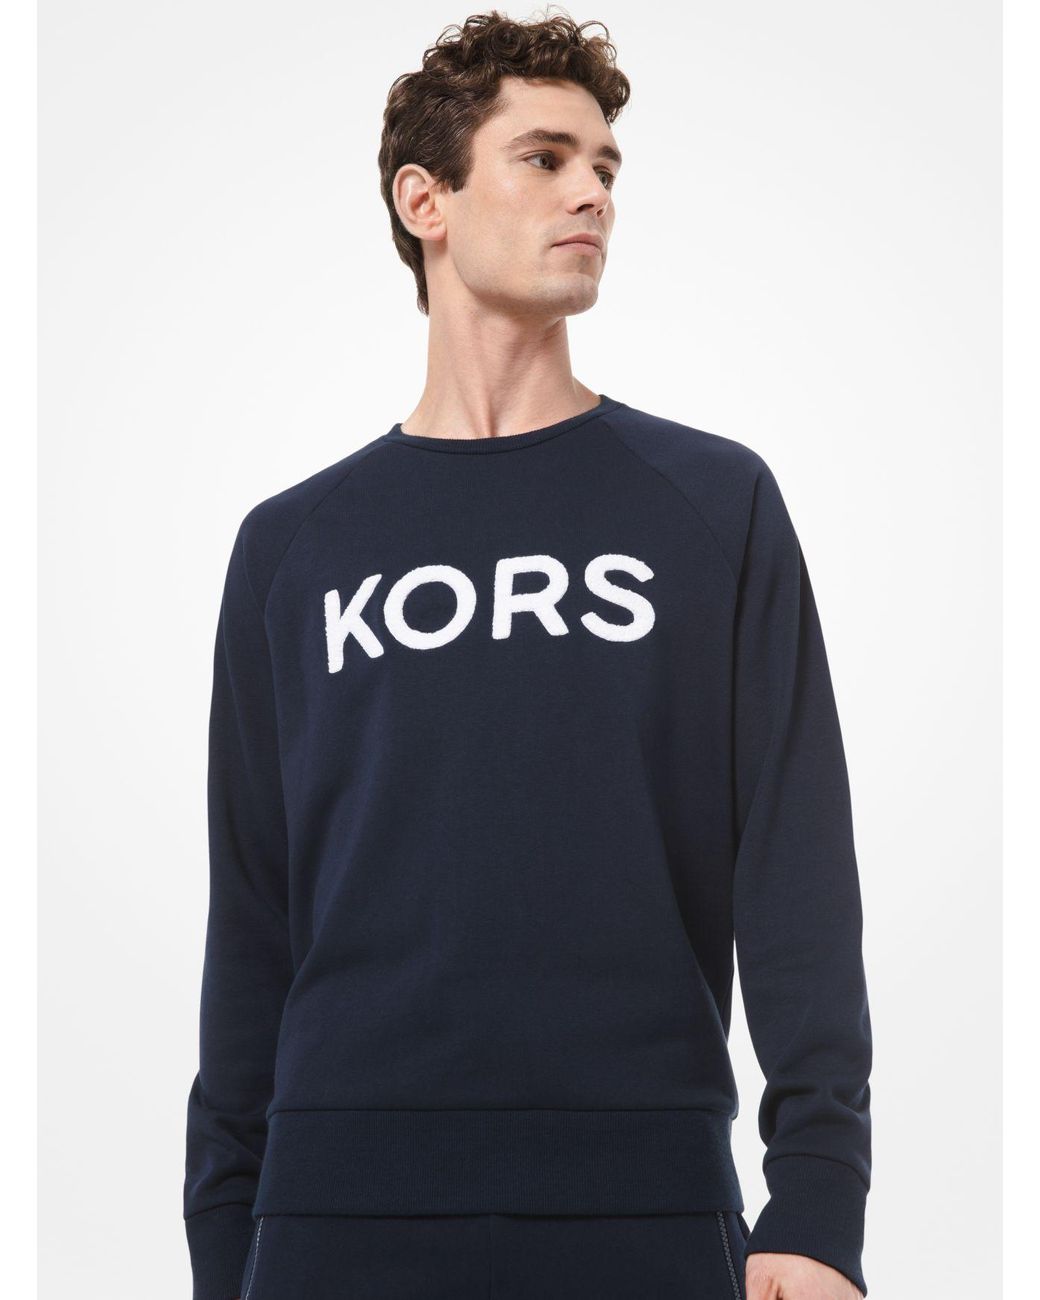 Michael Kors Cotton Terrycloth Logo Blue Sweatshirt for Men - Save 32% ...